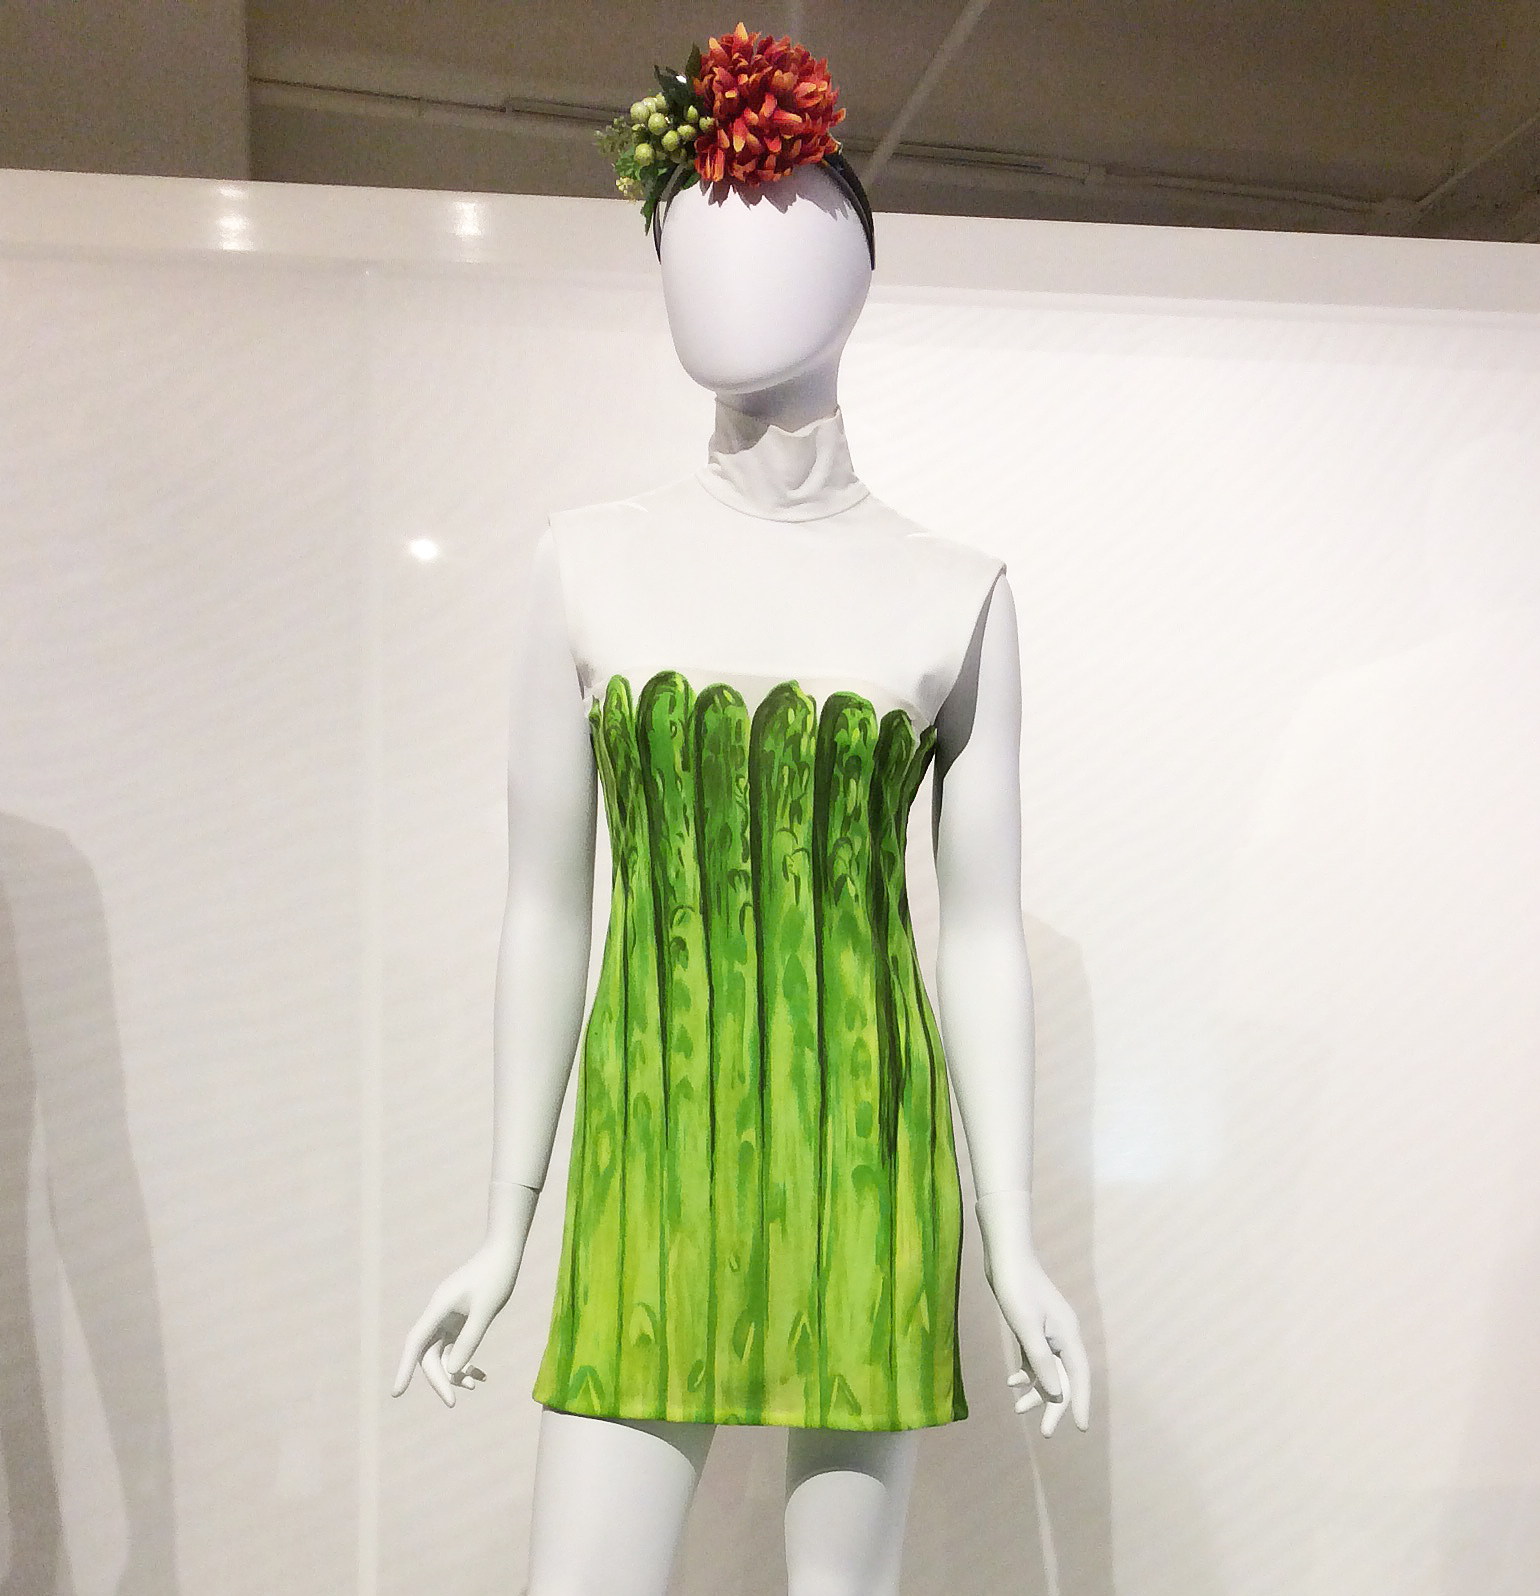 L’Eleganza del Cibo - 'The Elegance of Food' Exhibition - Fashion ...